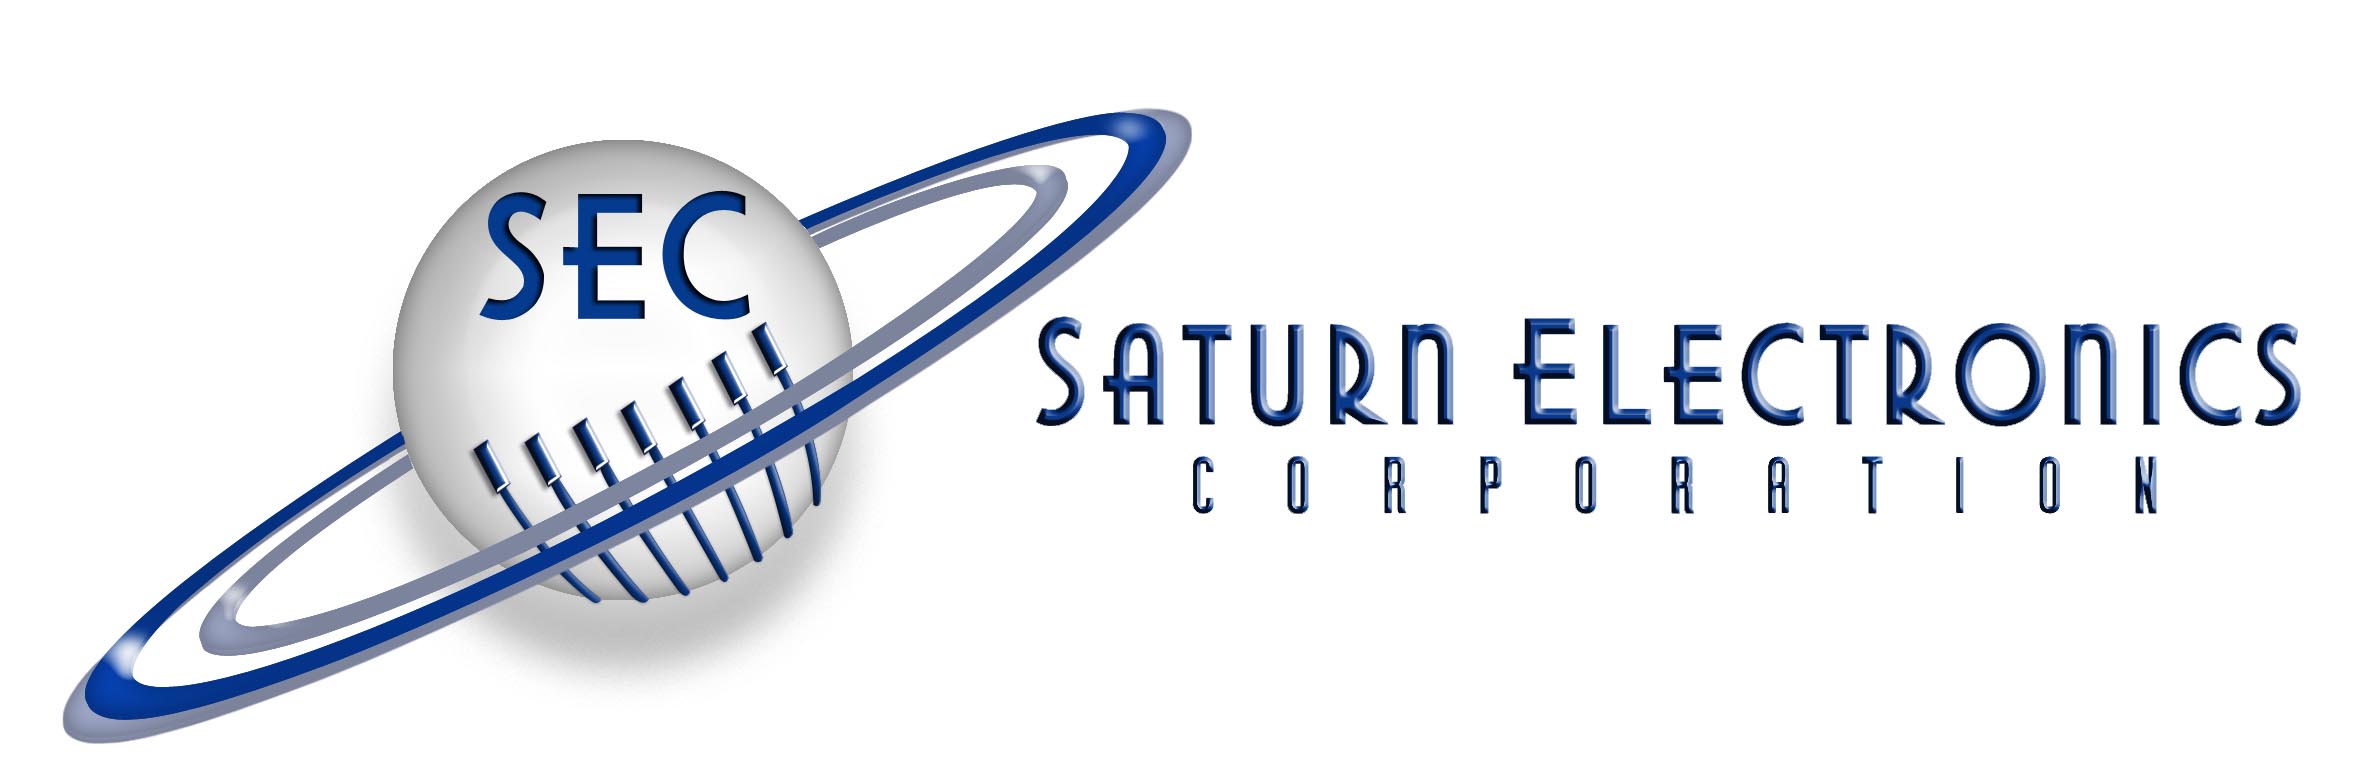 Saturn Electronics Corporation